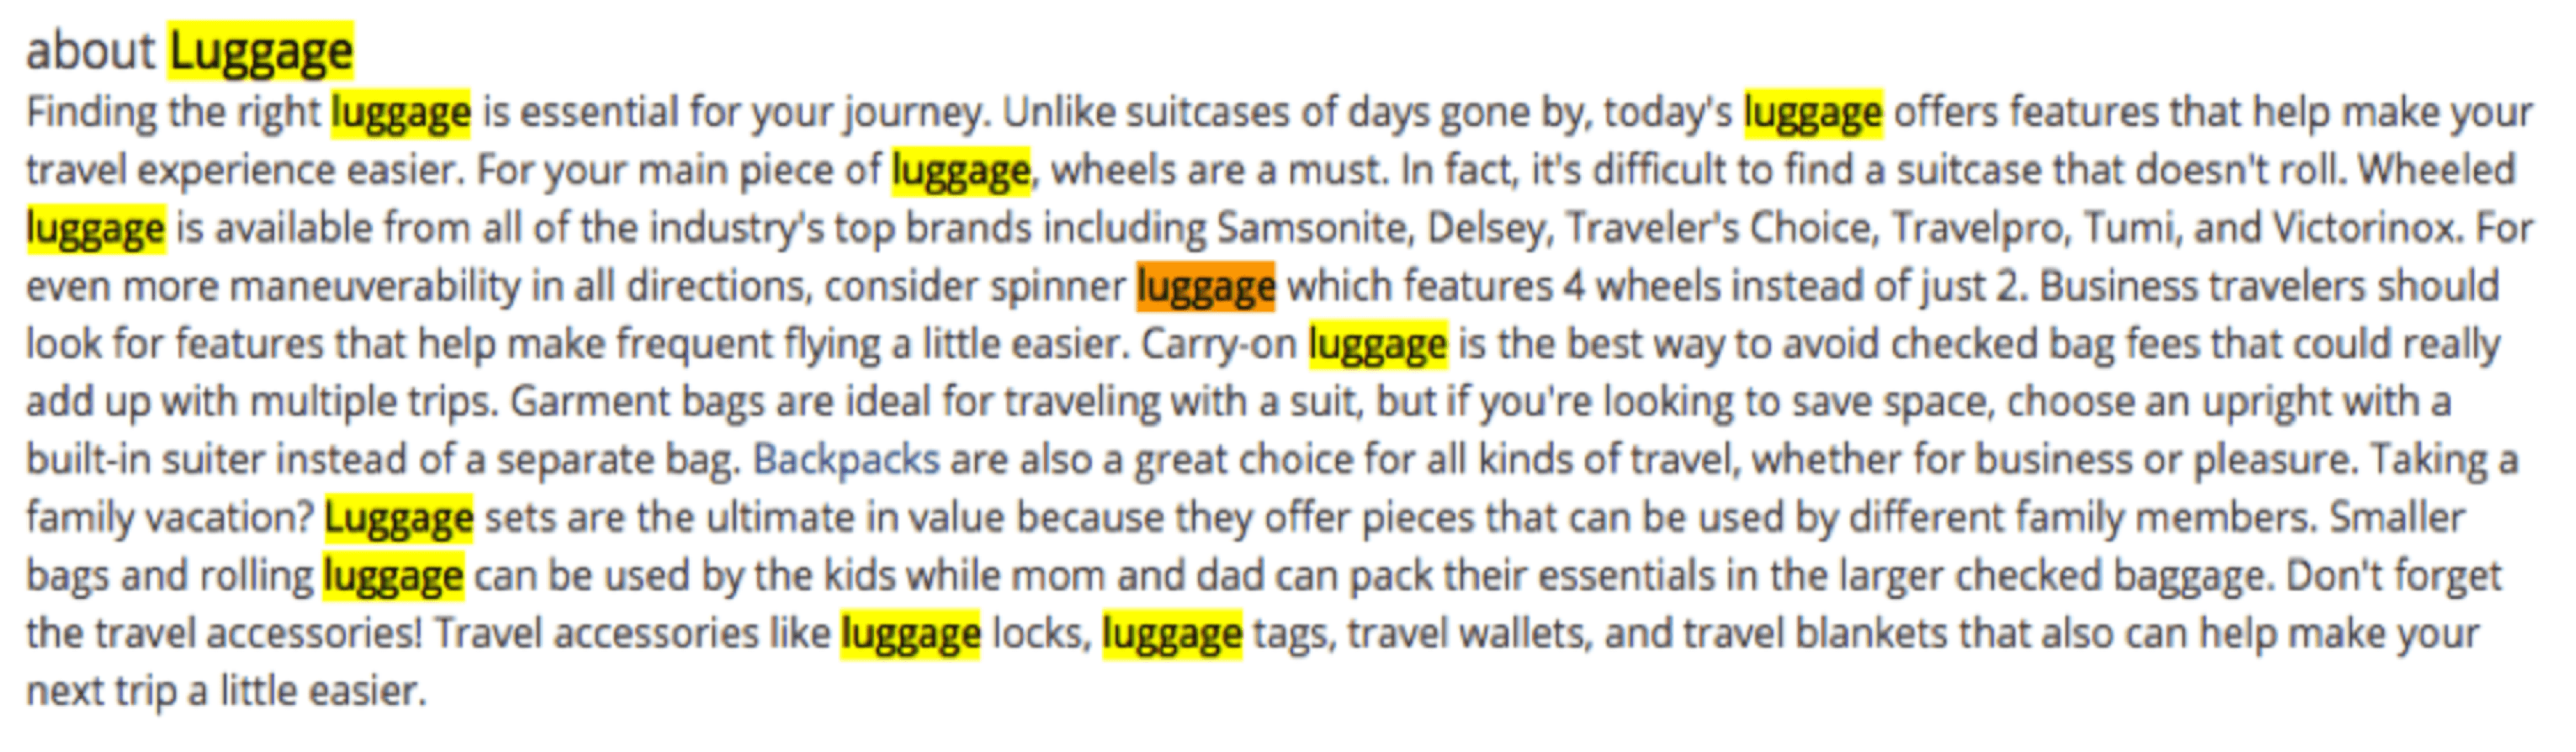 luggage product description